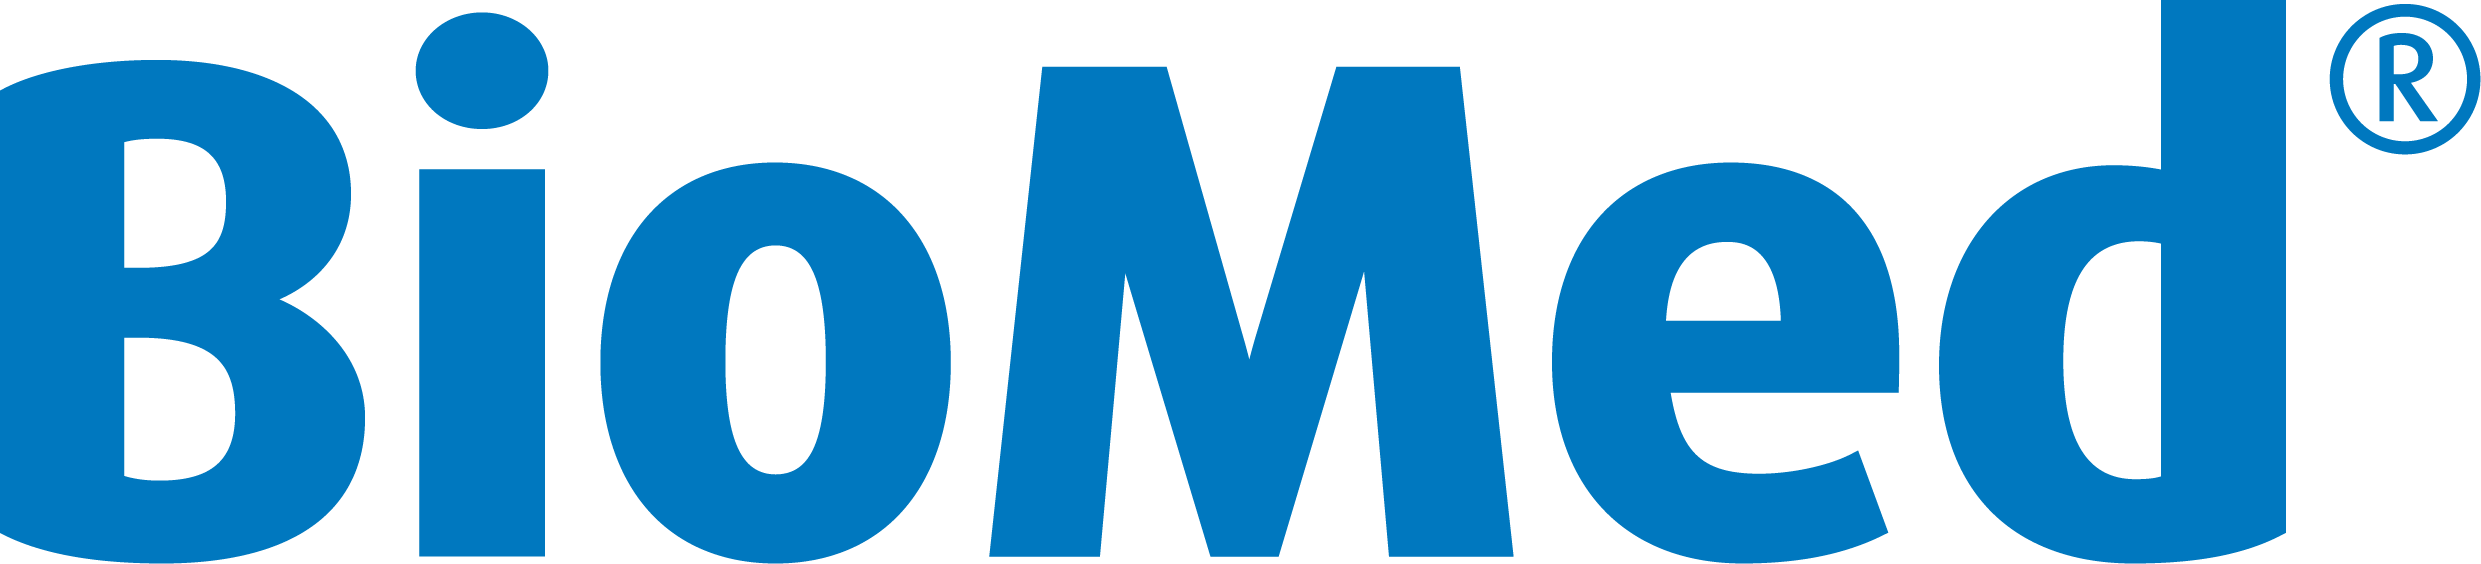 Biomed Logo blau RGB 210mm